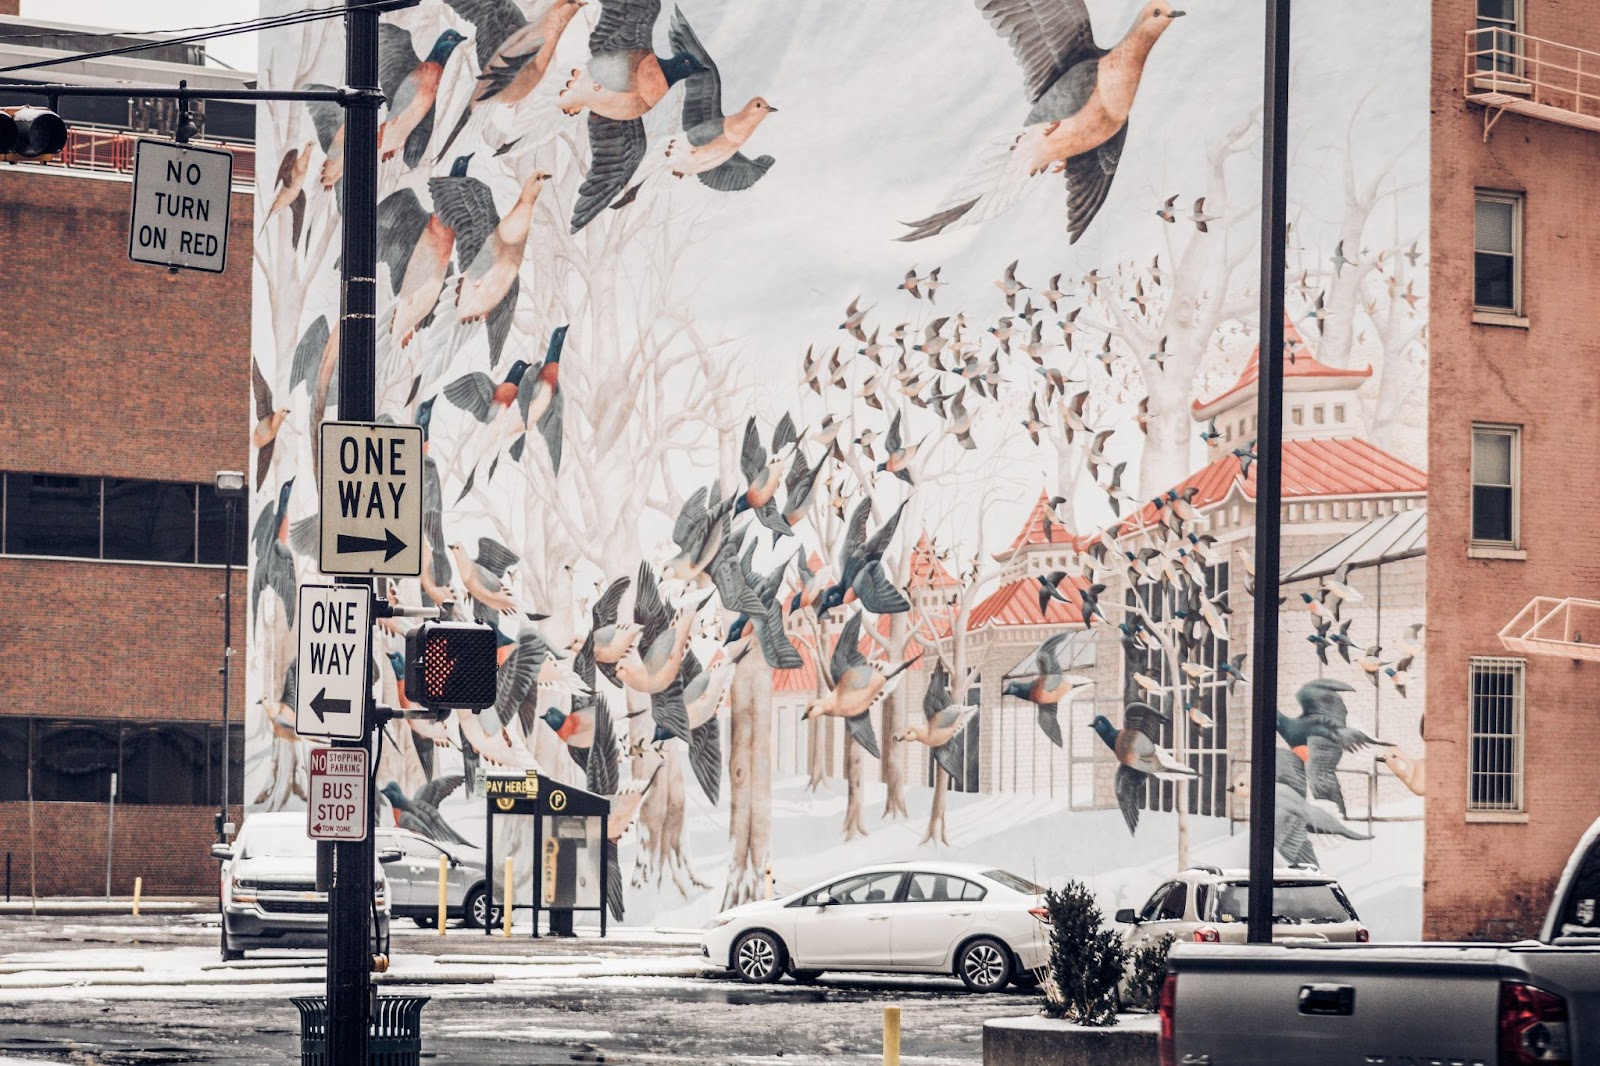 Mural in Cincinnati, Ohio Photo by Sean Foster on Unsplash

